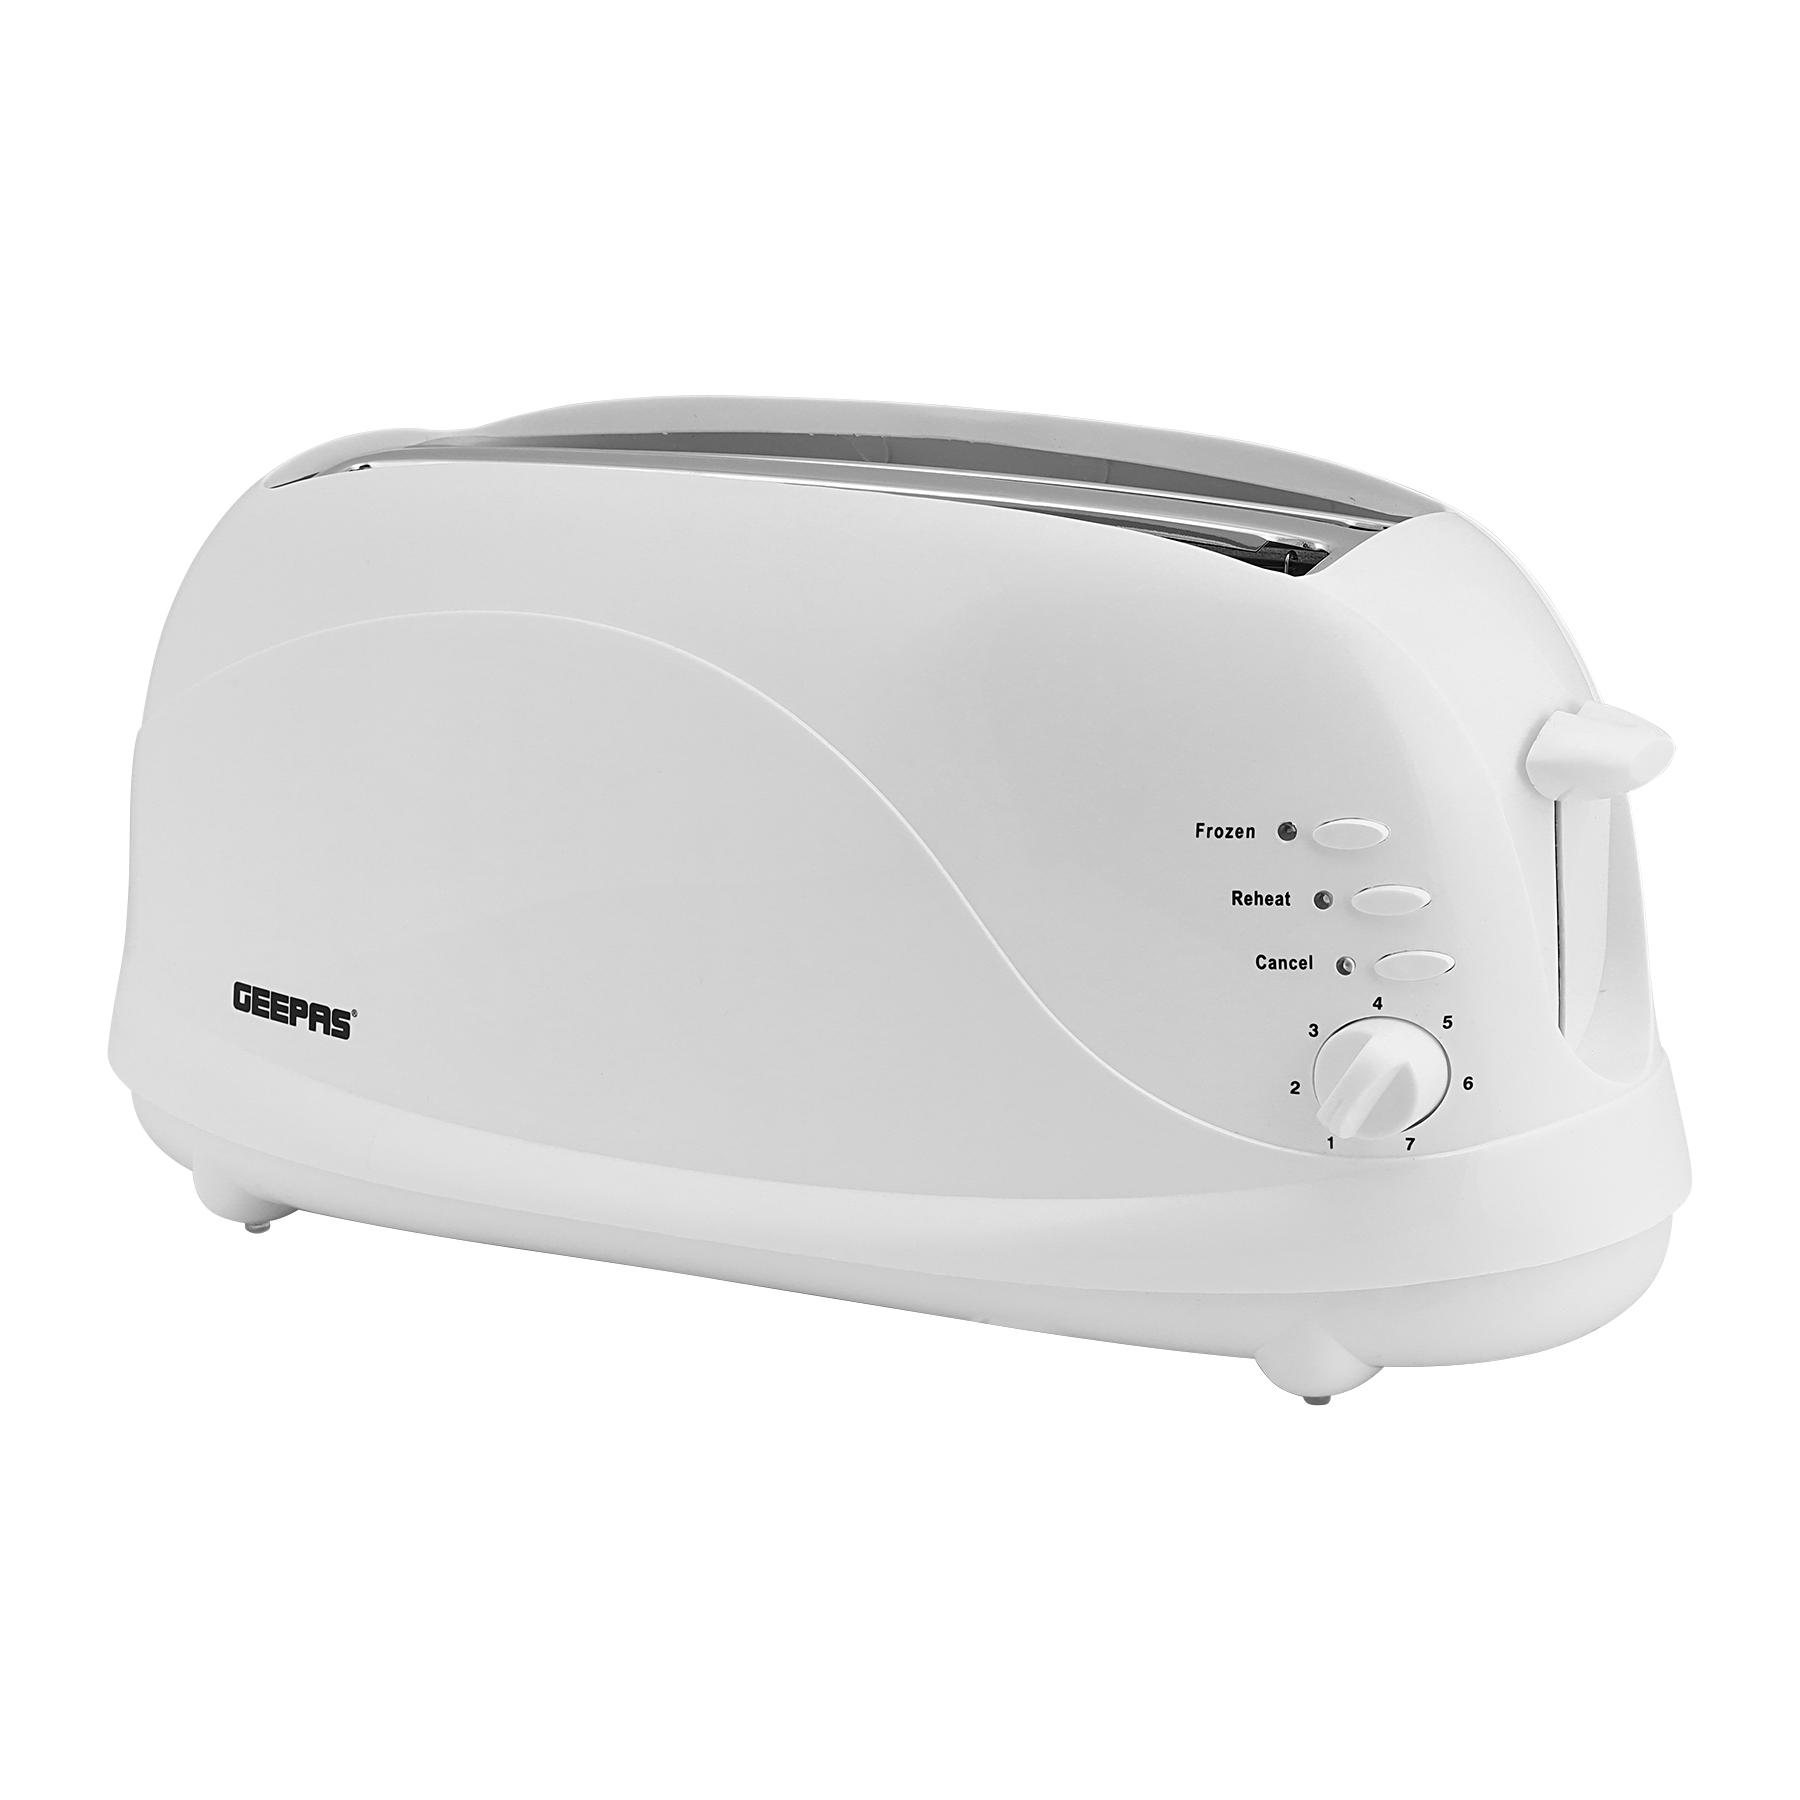 توستر 4 شرائح  Geepas -  Bread Toaster